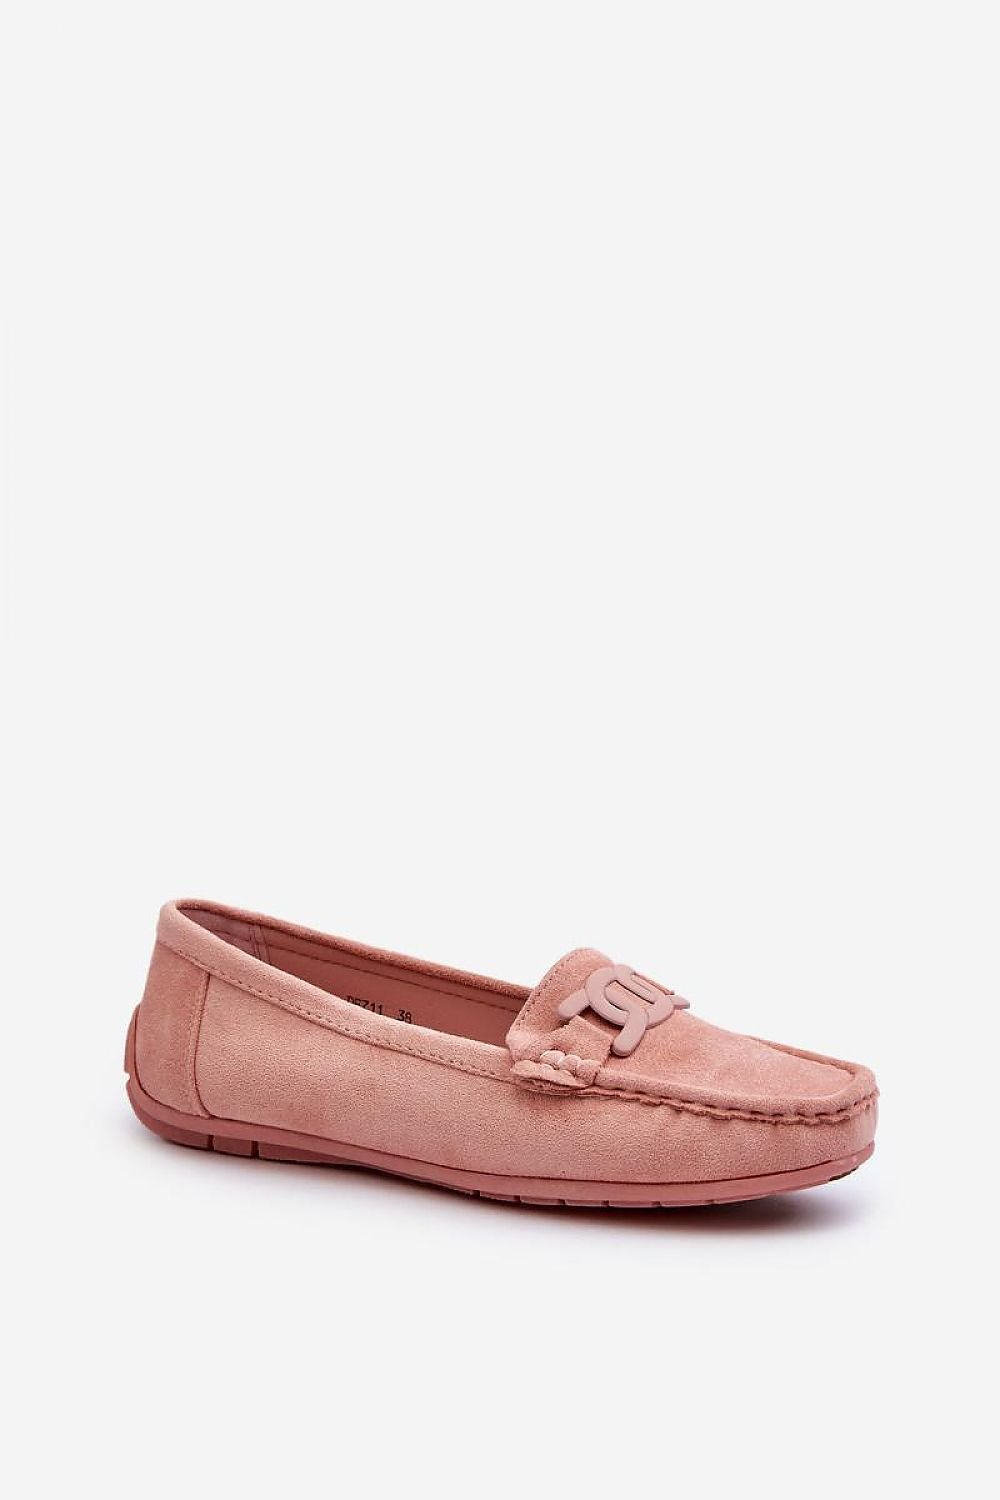 TEEK - Soft Link Top Mocassin Loafers SHOES TEEK MH pink 6.5 